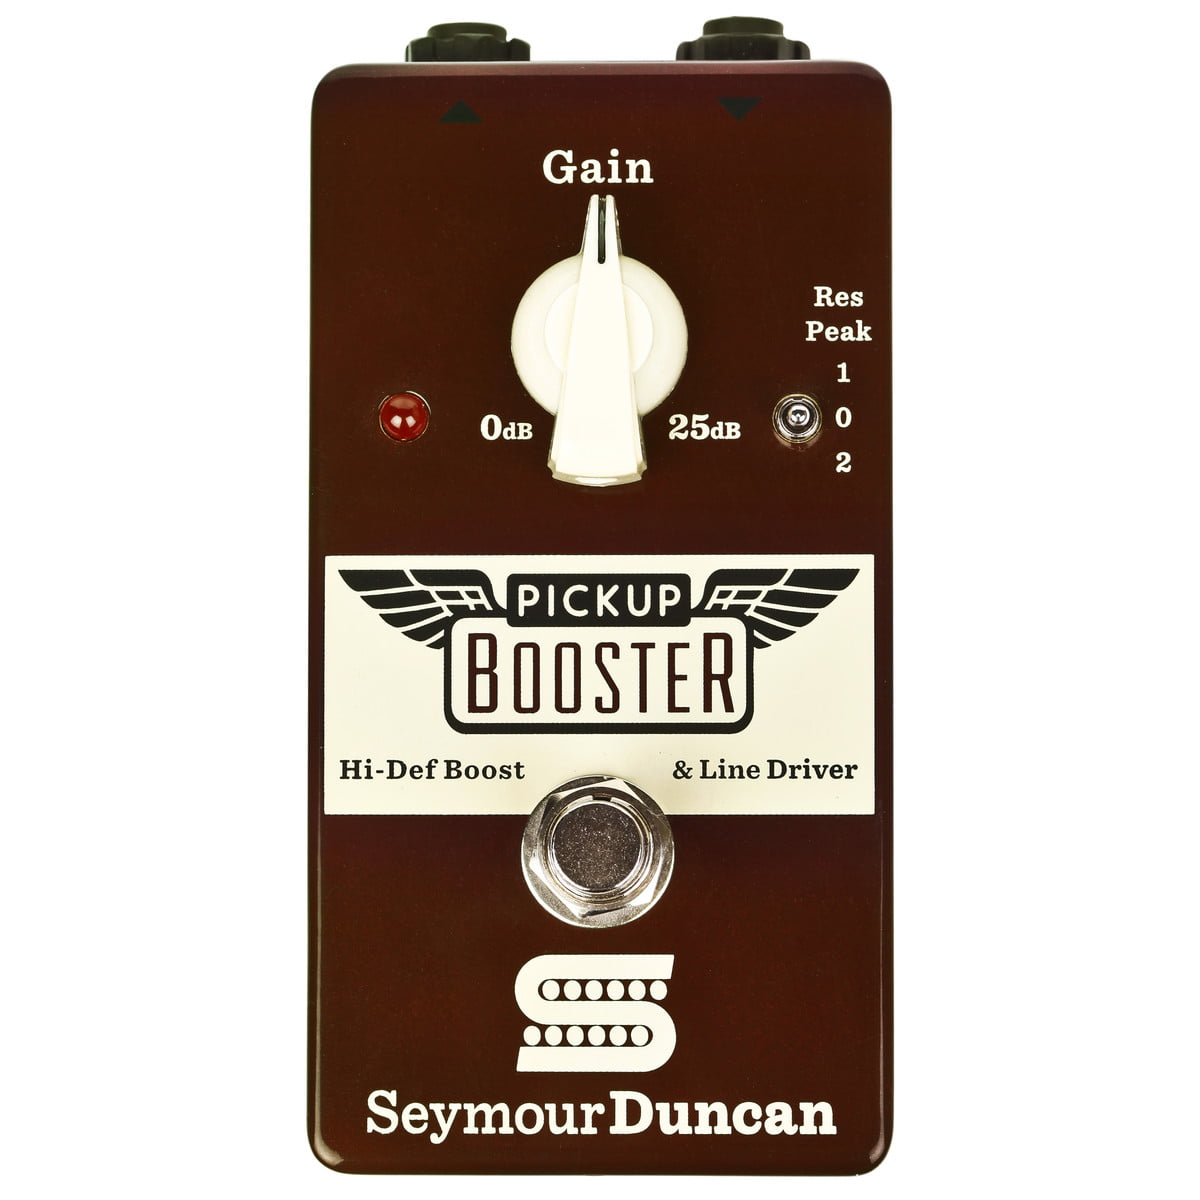 Seymour Duncan Pickup Booster - New Seymour Duncan               Boost    Guitar Effect Pedal